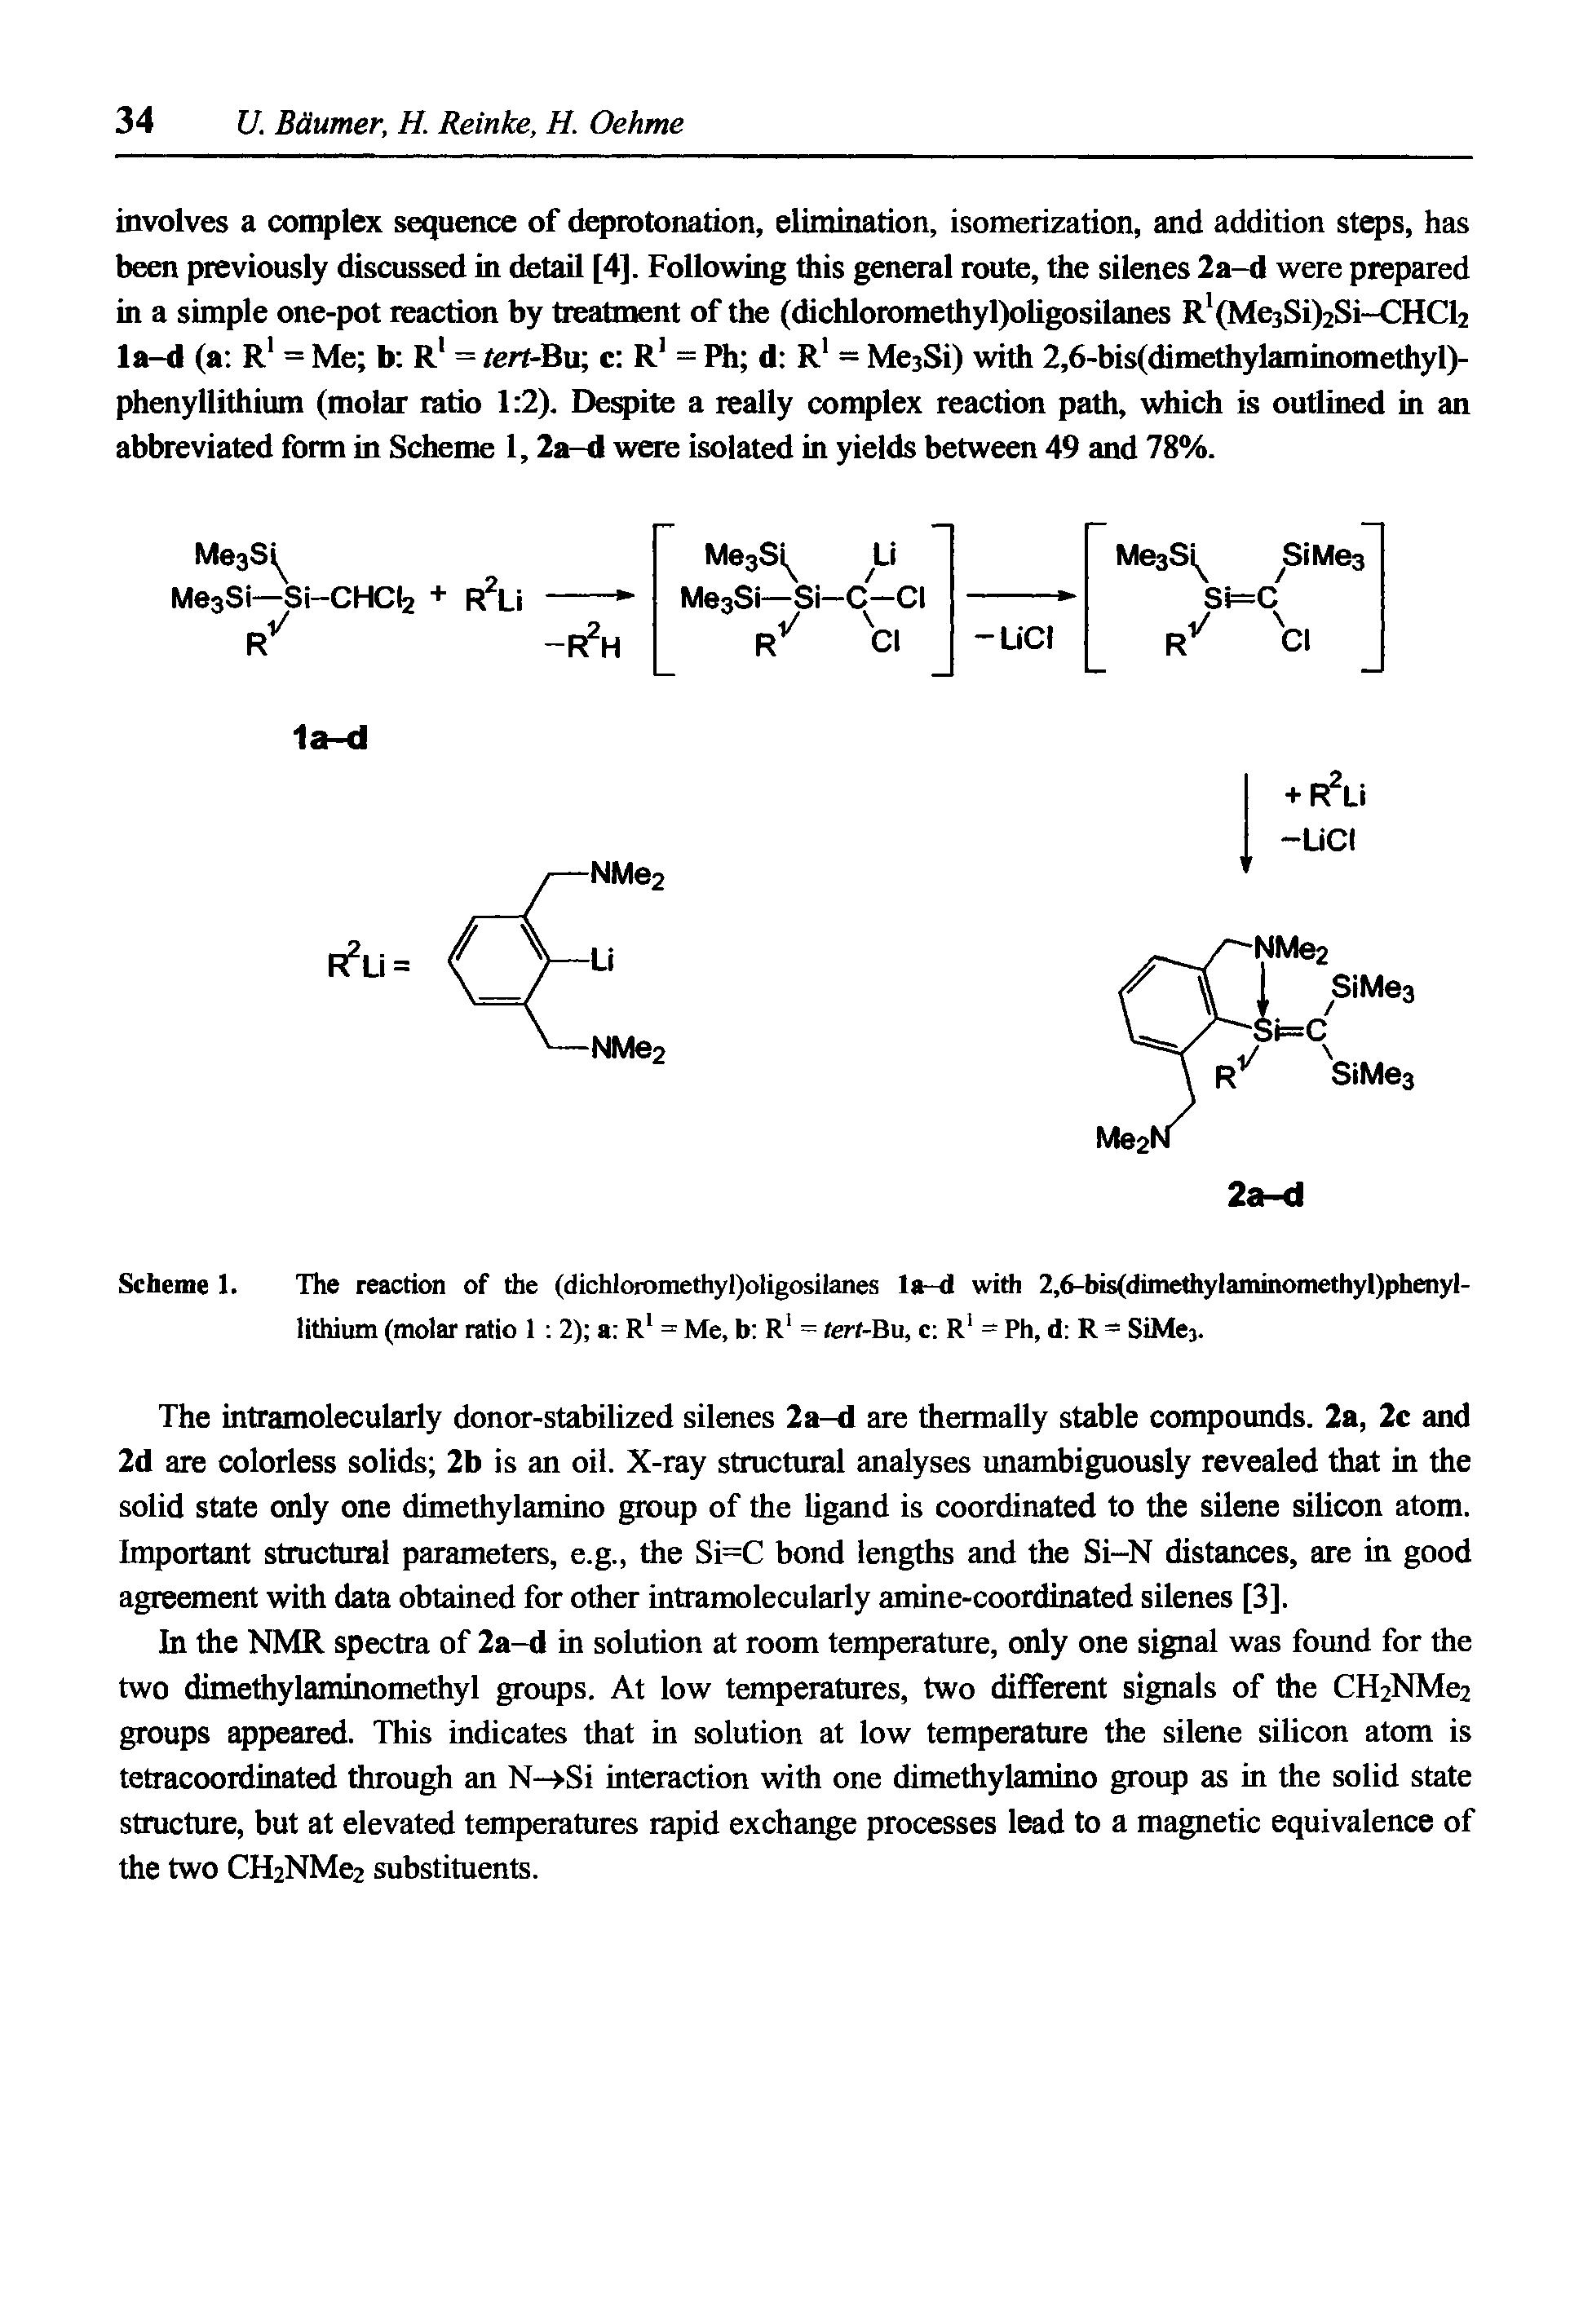 Scheme 1. The reaction of the (dichloromethyl)oligosilanes la-d with 2,6-bis(dunethylaminomethyl)phenyl-lithium (molar ratio 1 2) a R = Me, b R = tert-Bu, c R = Ph, d R = SiMej.